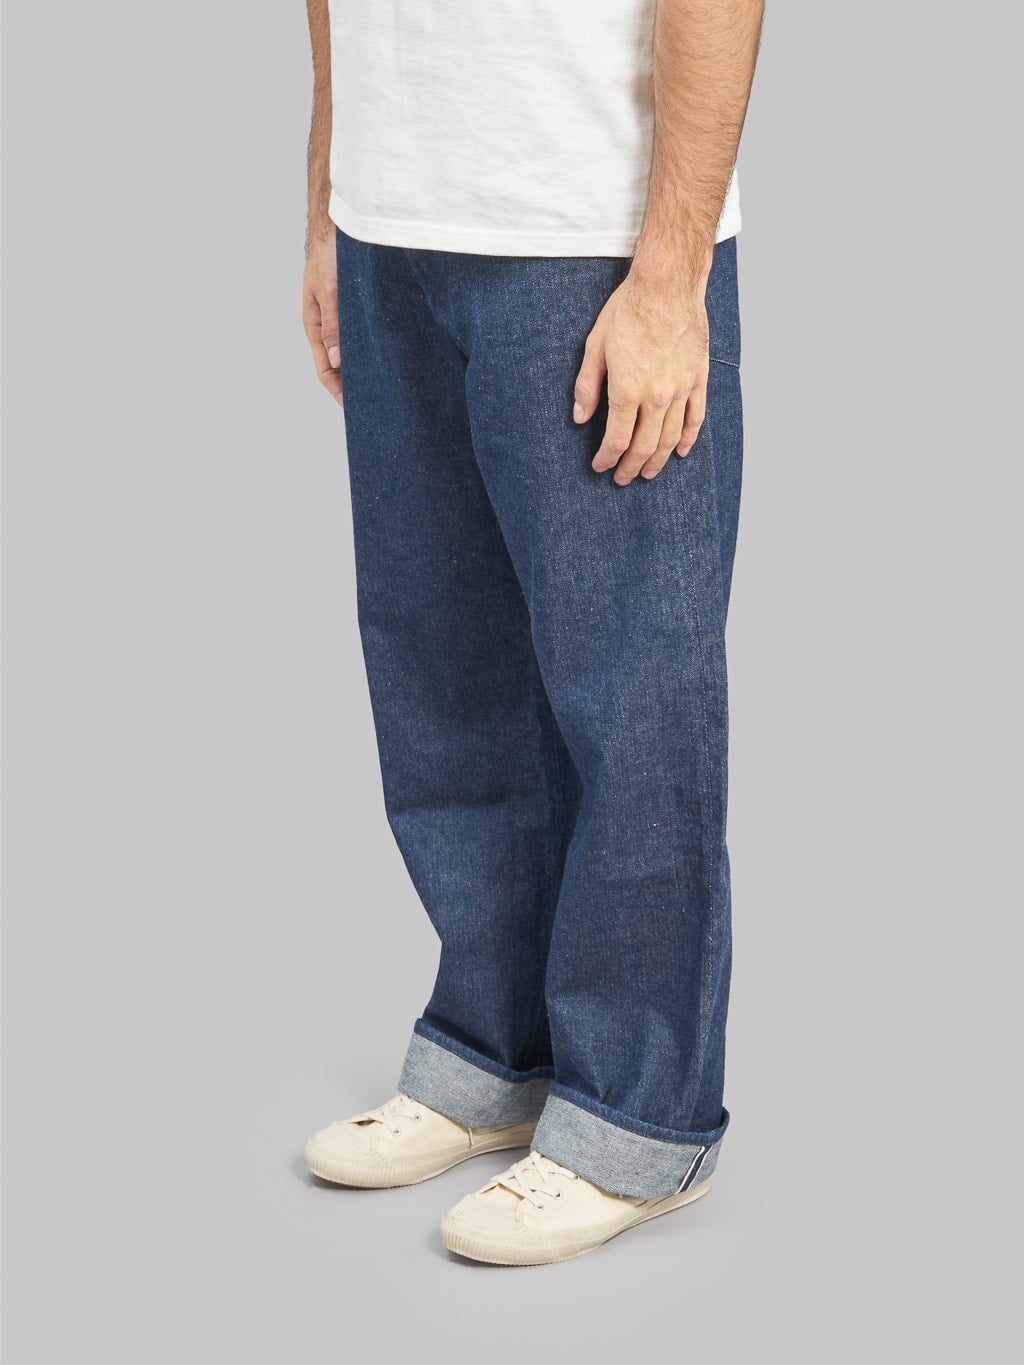 fullcount 1121 duke original selvedge denim super wide jeans side fit